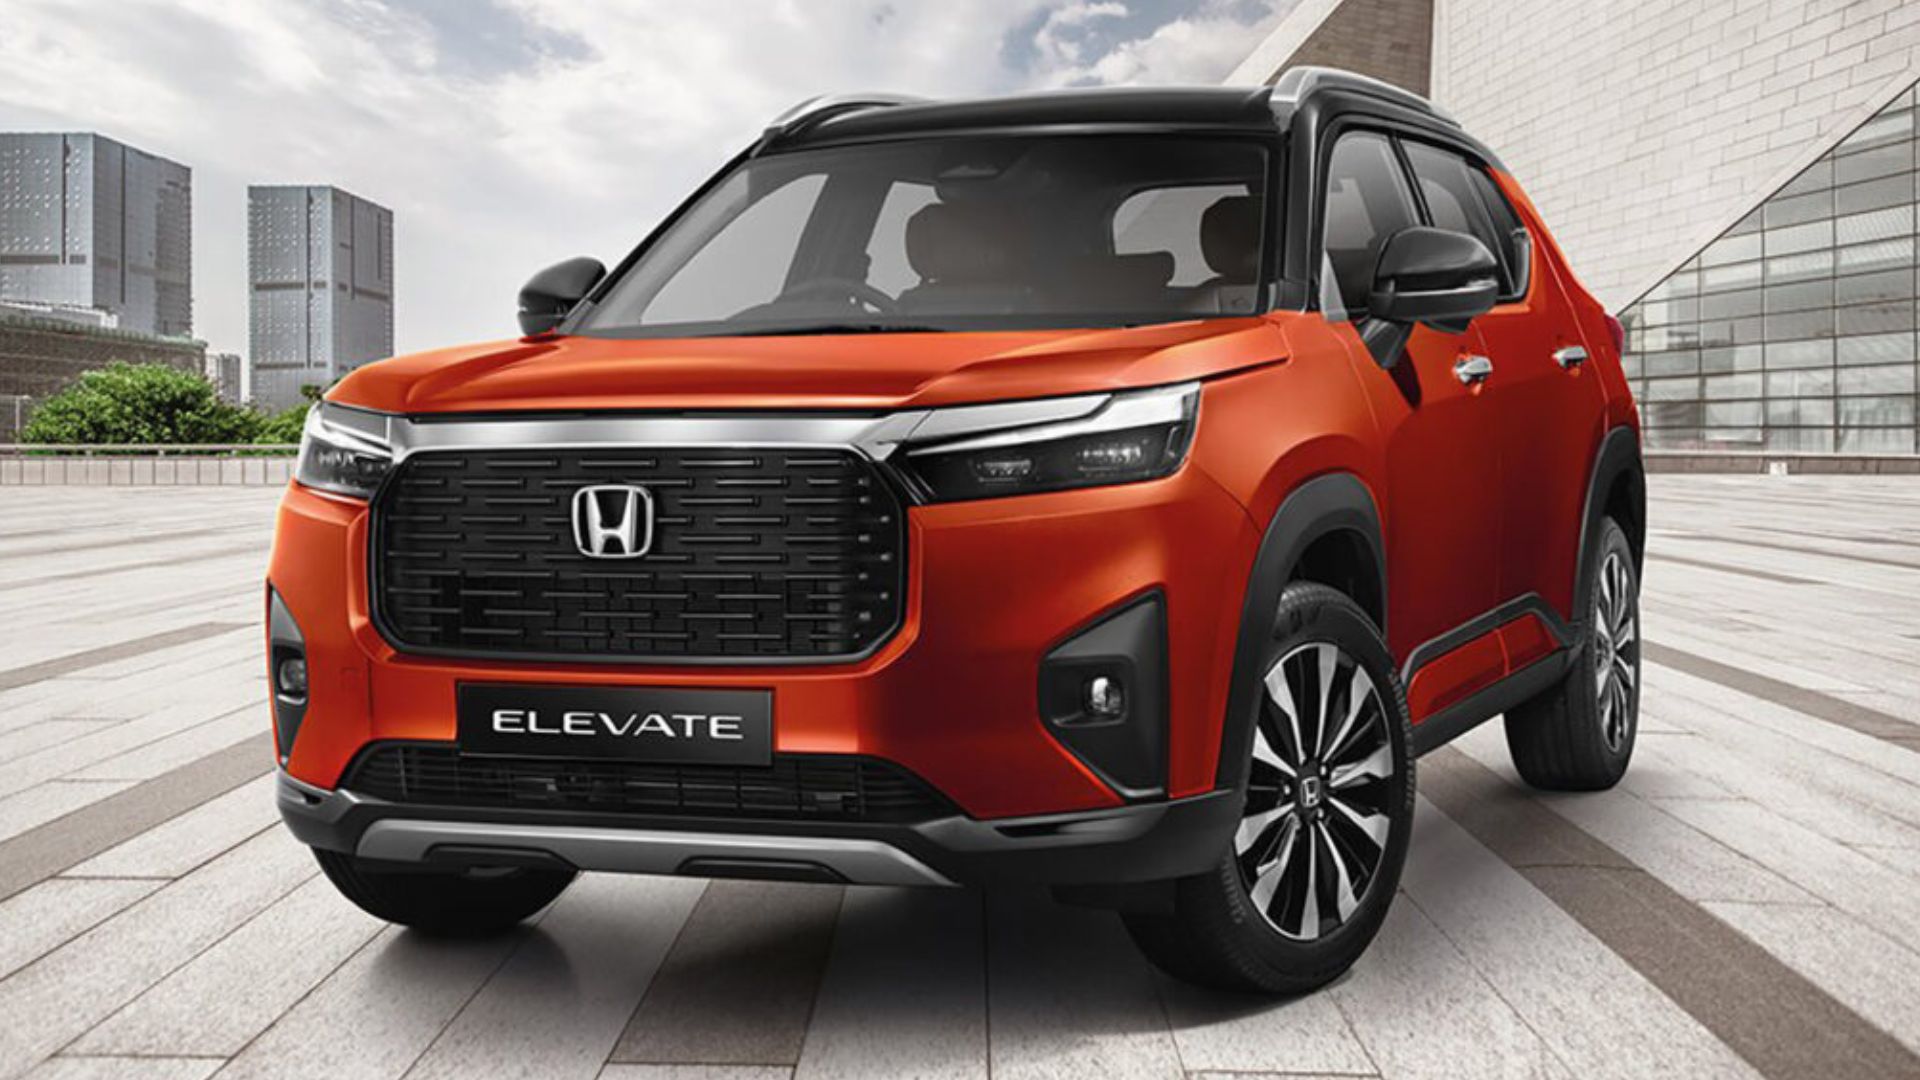 Honda Elevate reveal